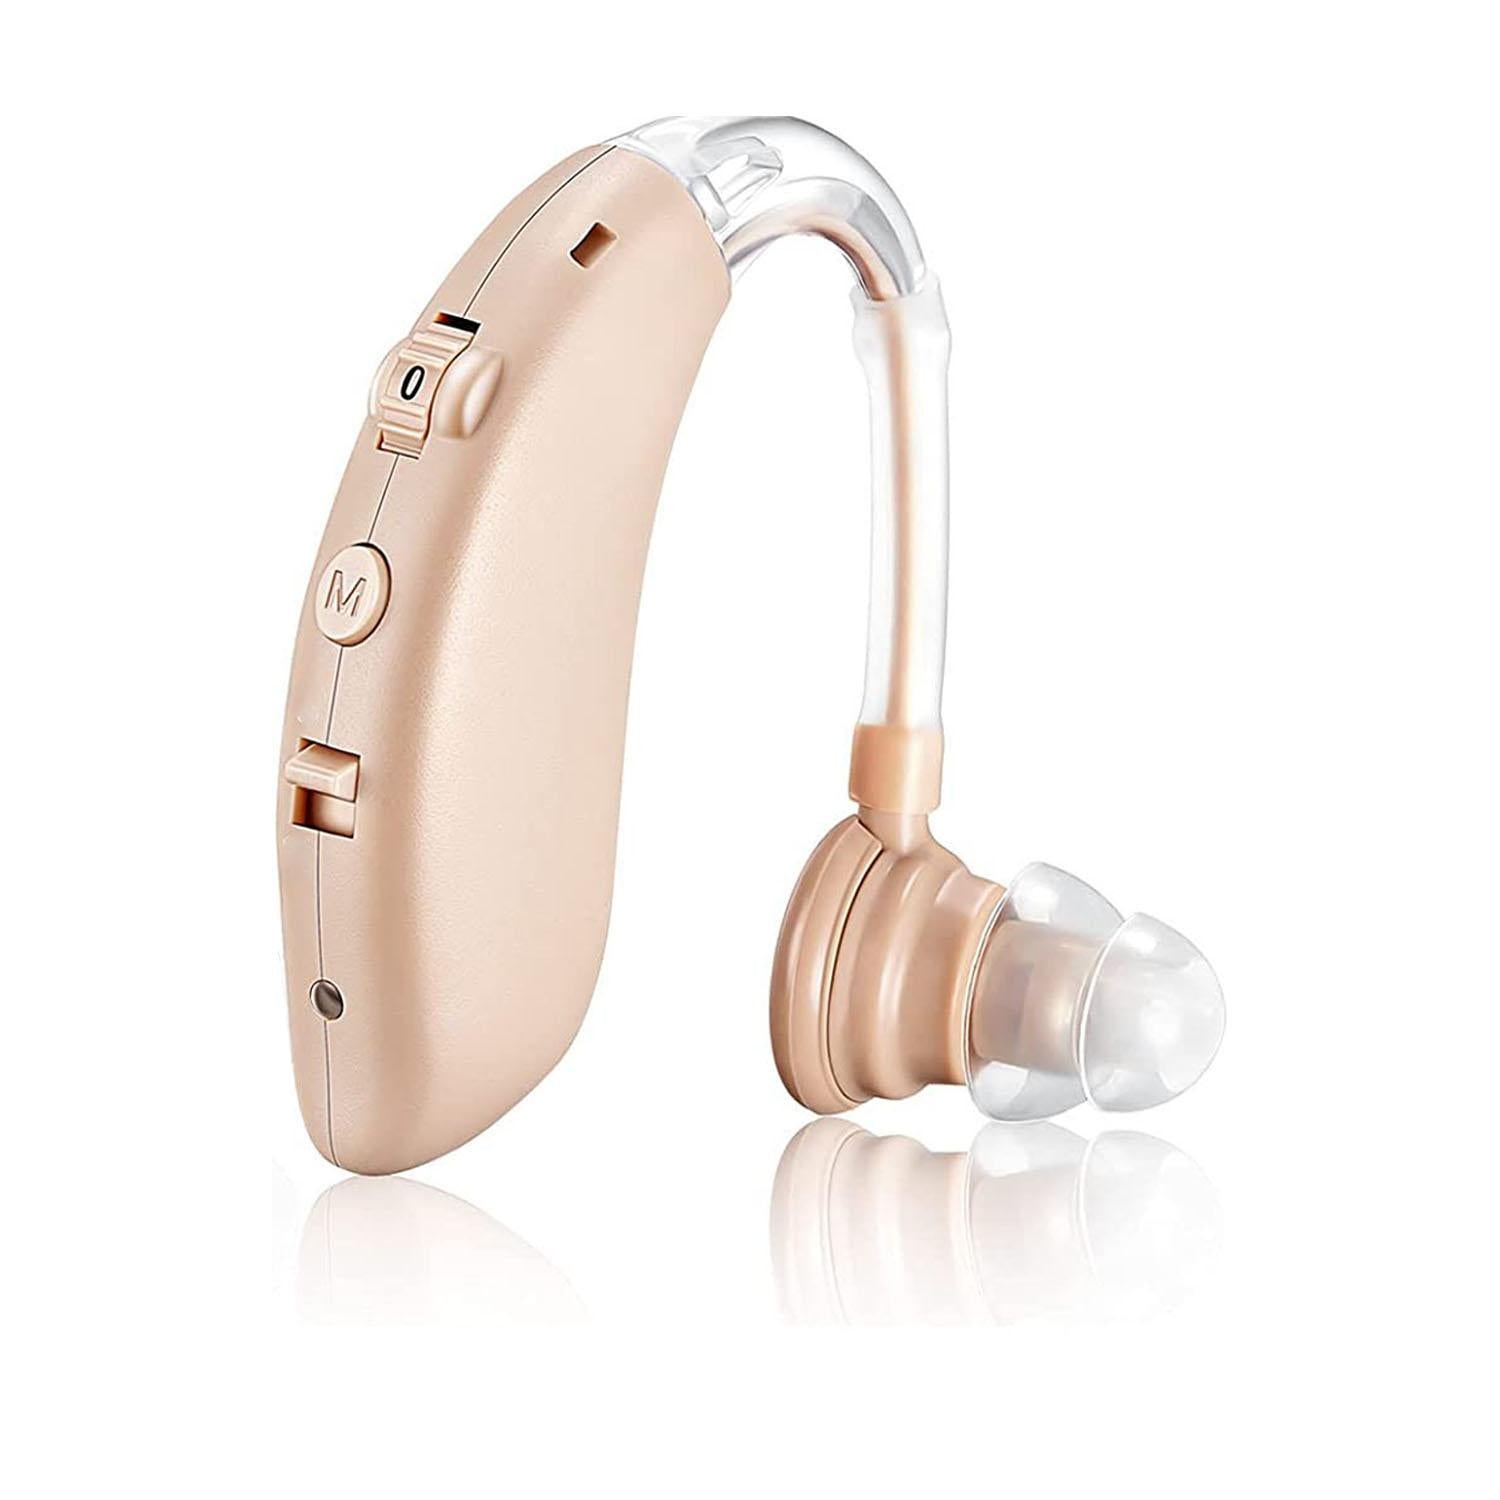 Doosl Hearing Aids for Seniors, Behind the Ear Sound Amplifier, Enhances Speech and Audio Sound Amplifier, for Adults and Seniors, Beige